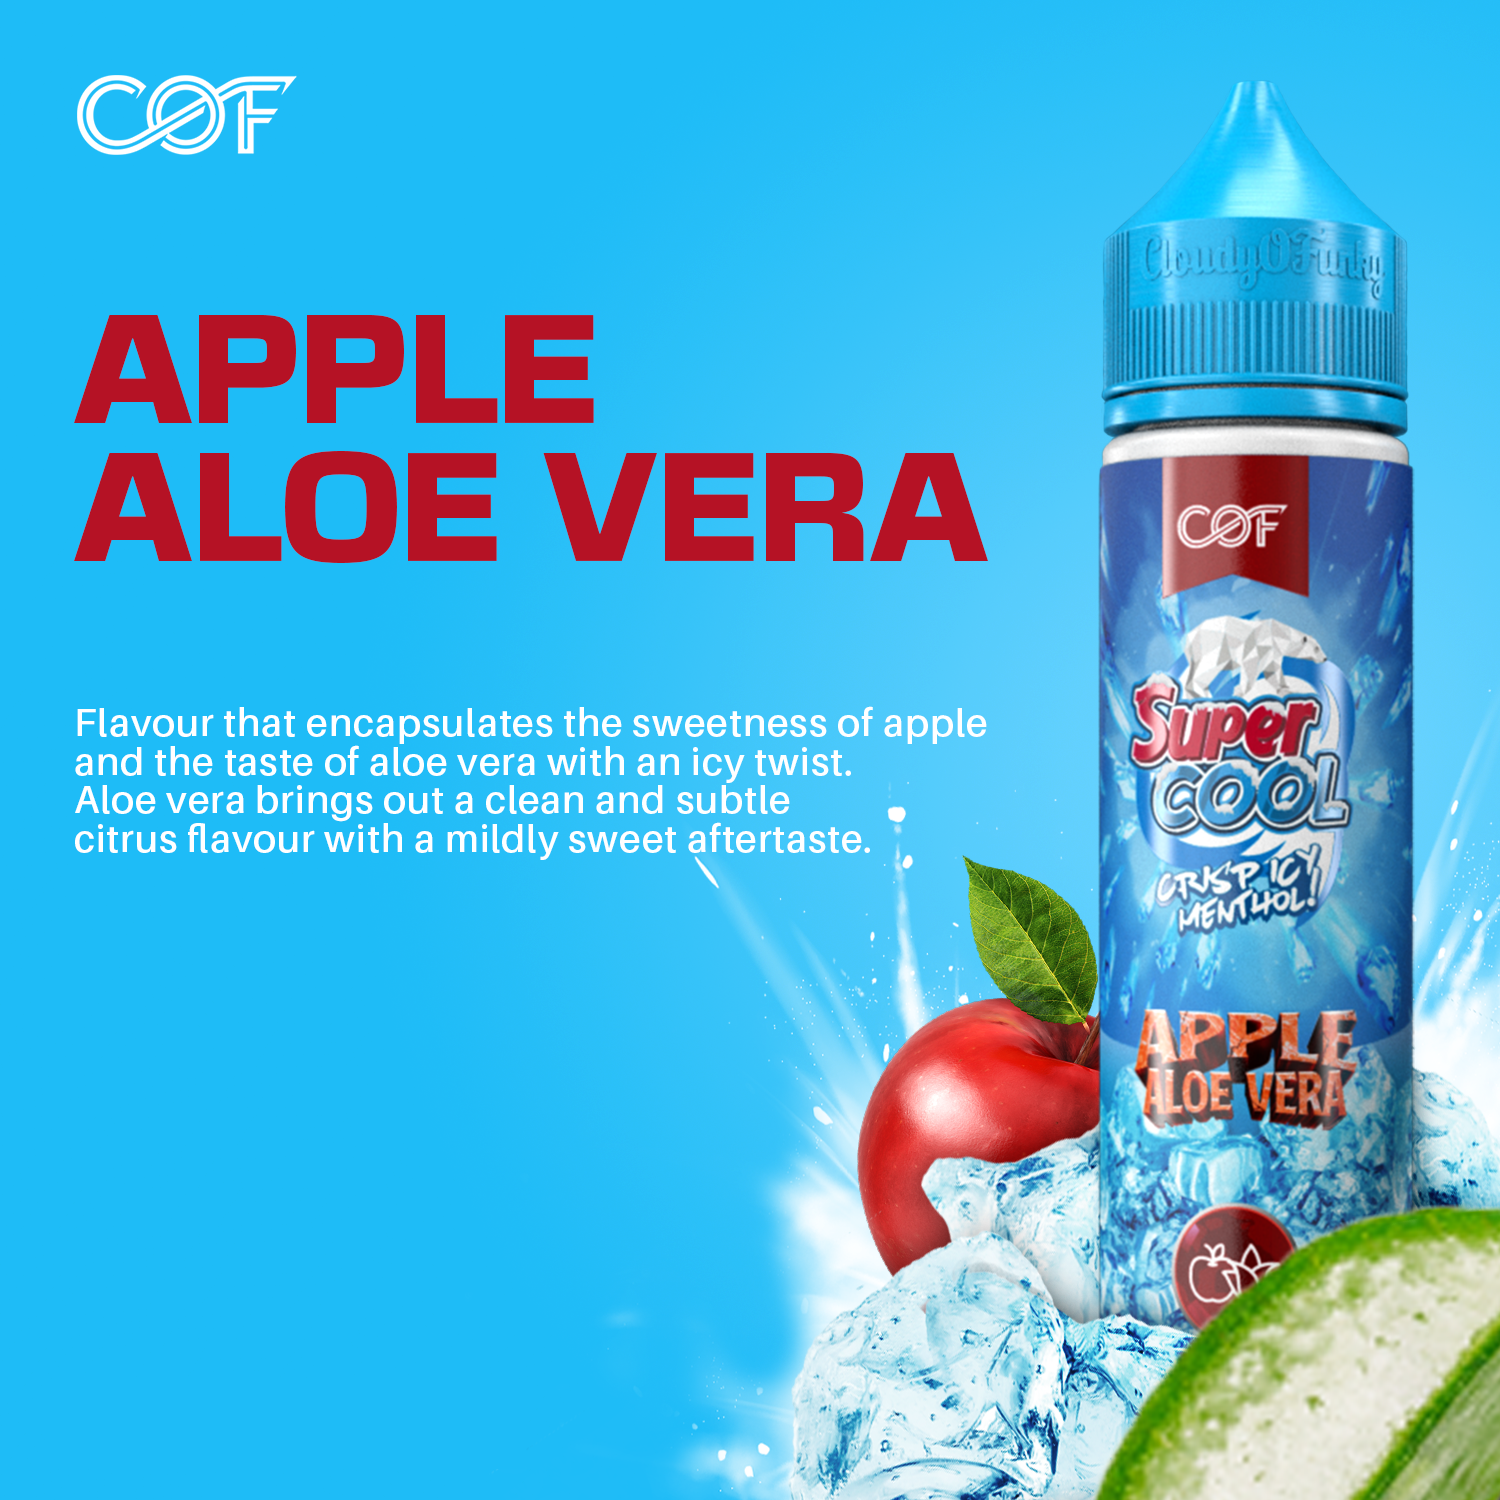 Cloud Of Funky Super Cool Series - Apple Aloe Vera